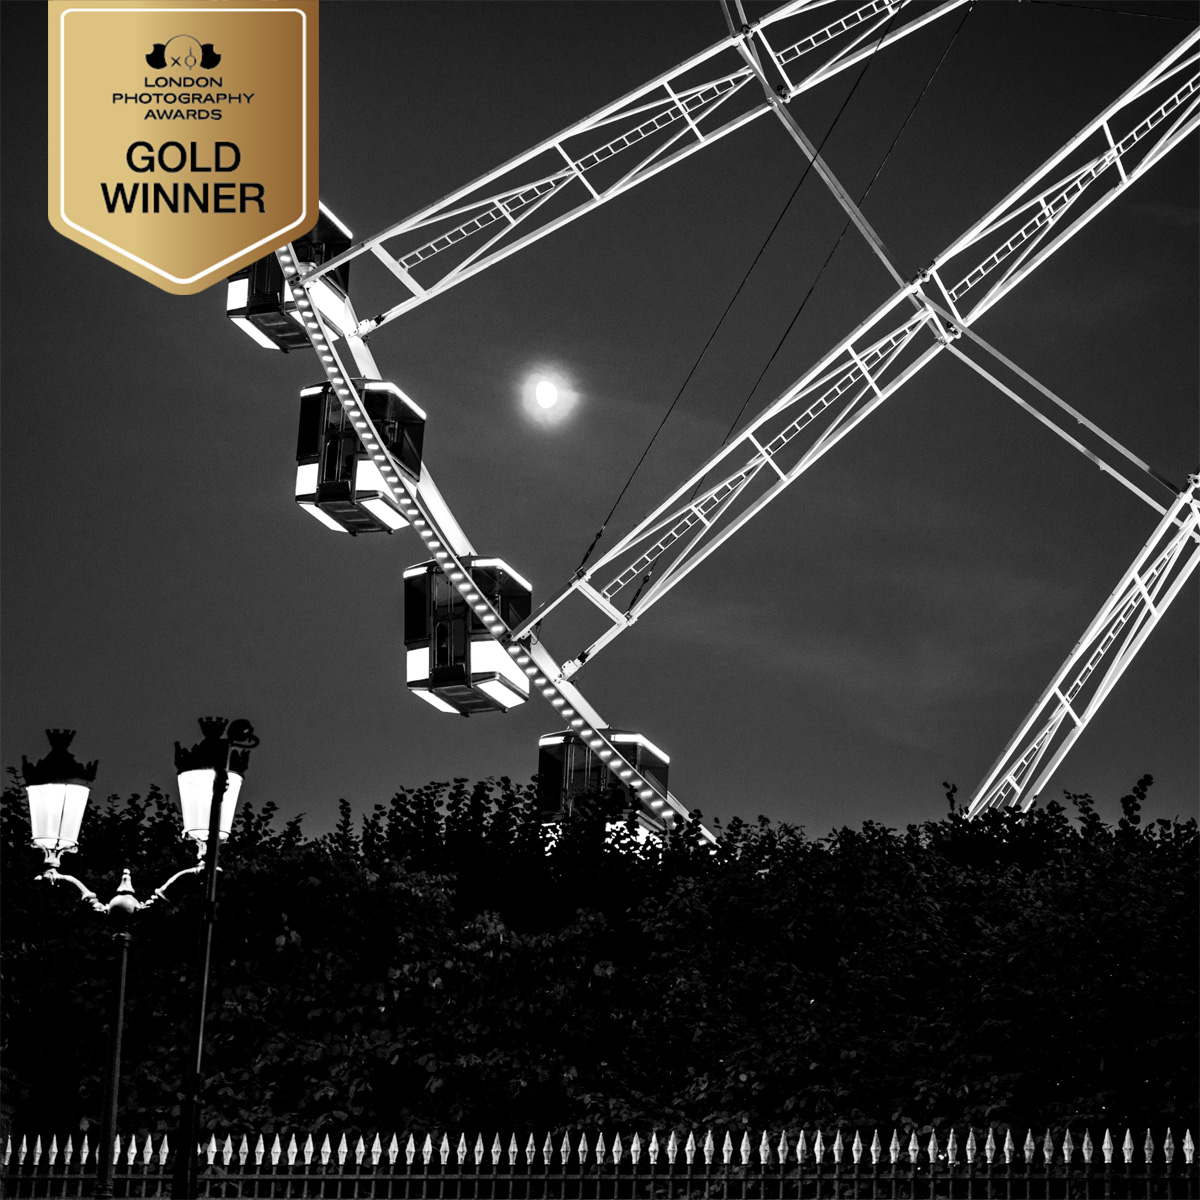 𝟐𝟎𝟐𝟑 𝐆𝐨𝐥𝐝 𝐖𝐢𝐧𝐧𝐞𝐫 📷

Ferris Wheel in the moonlight by Adrian Schaub

Winner's Page: tinyurl.com/mr388ah4
Enter today: londonphotographyawards.com

#LondonPhotographyAwards #photographyawards #InternationalPhotographyAwards #LITWinningWork #blackandwhitephotography